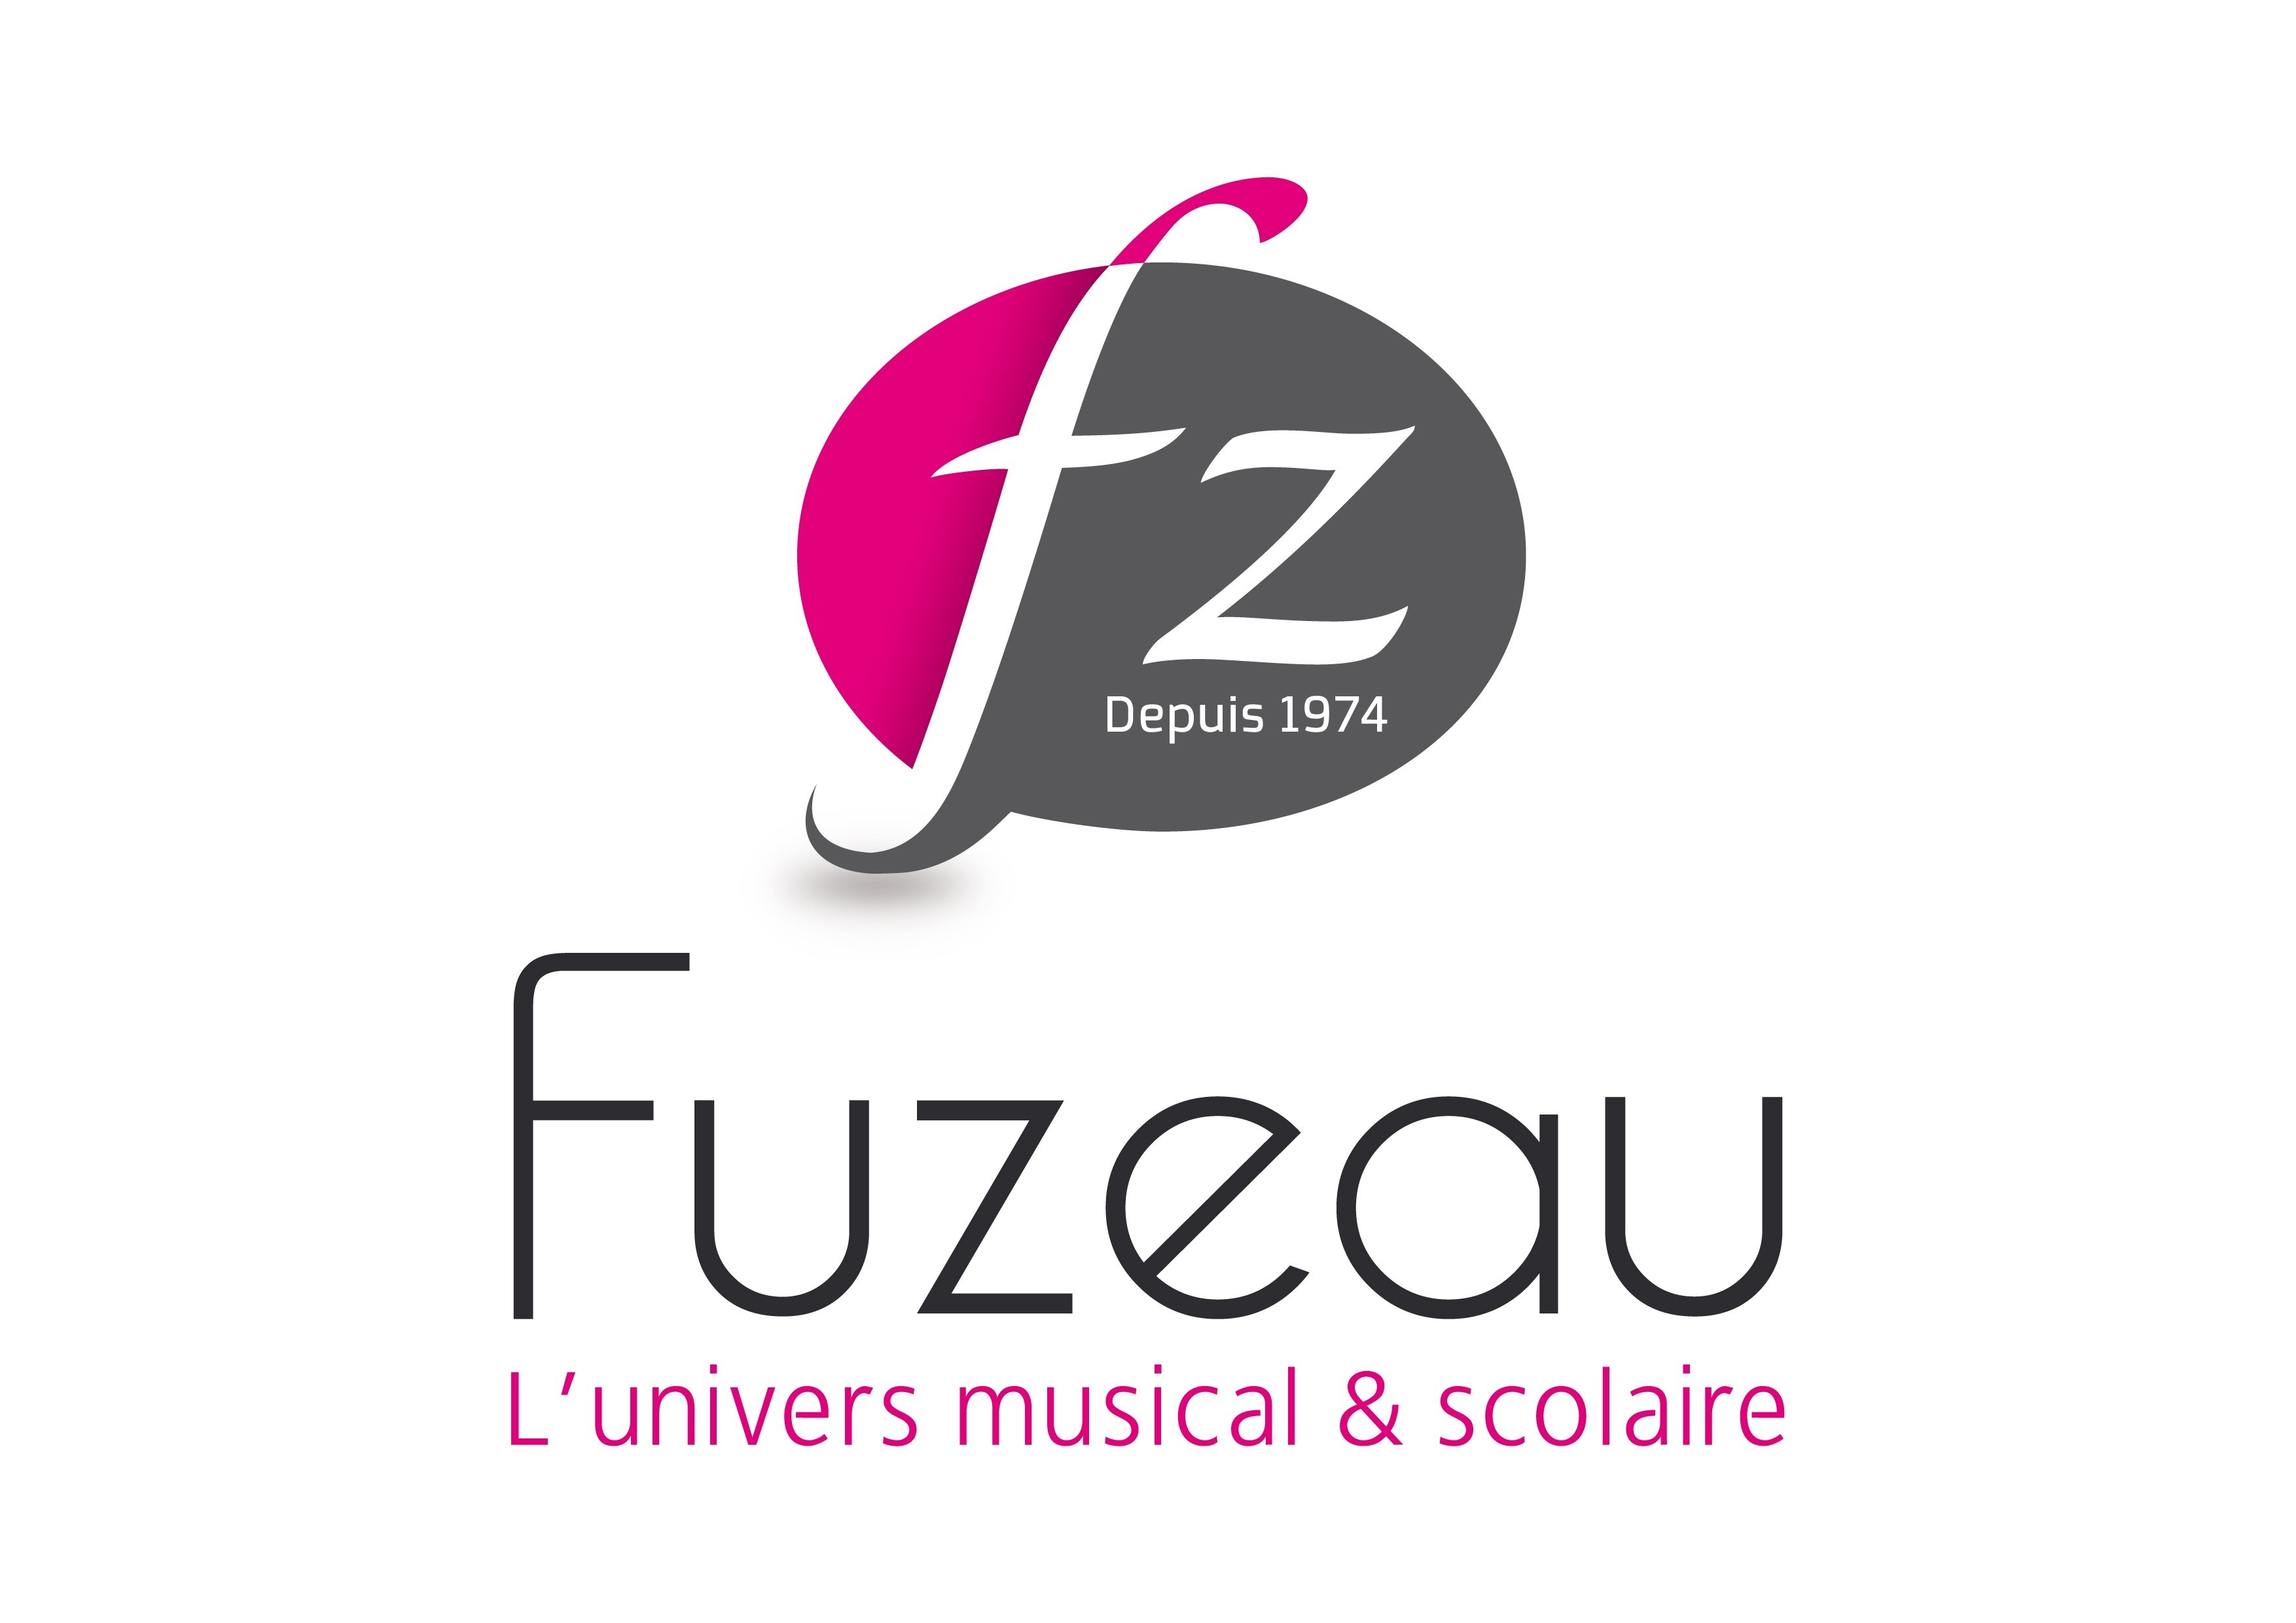 Carillon pianot - Fuzeau - apprendre la musique